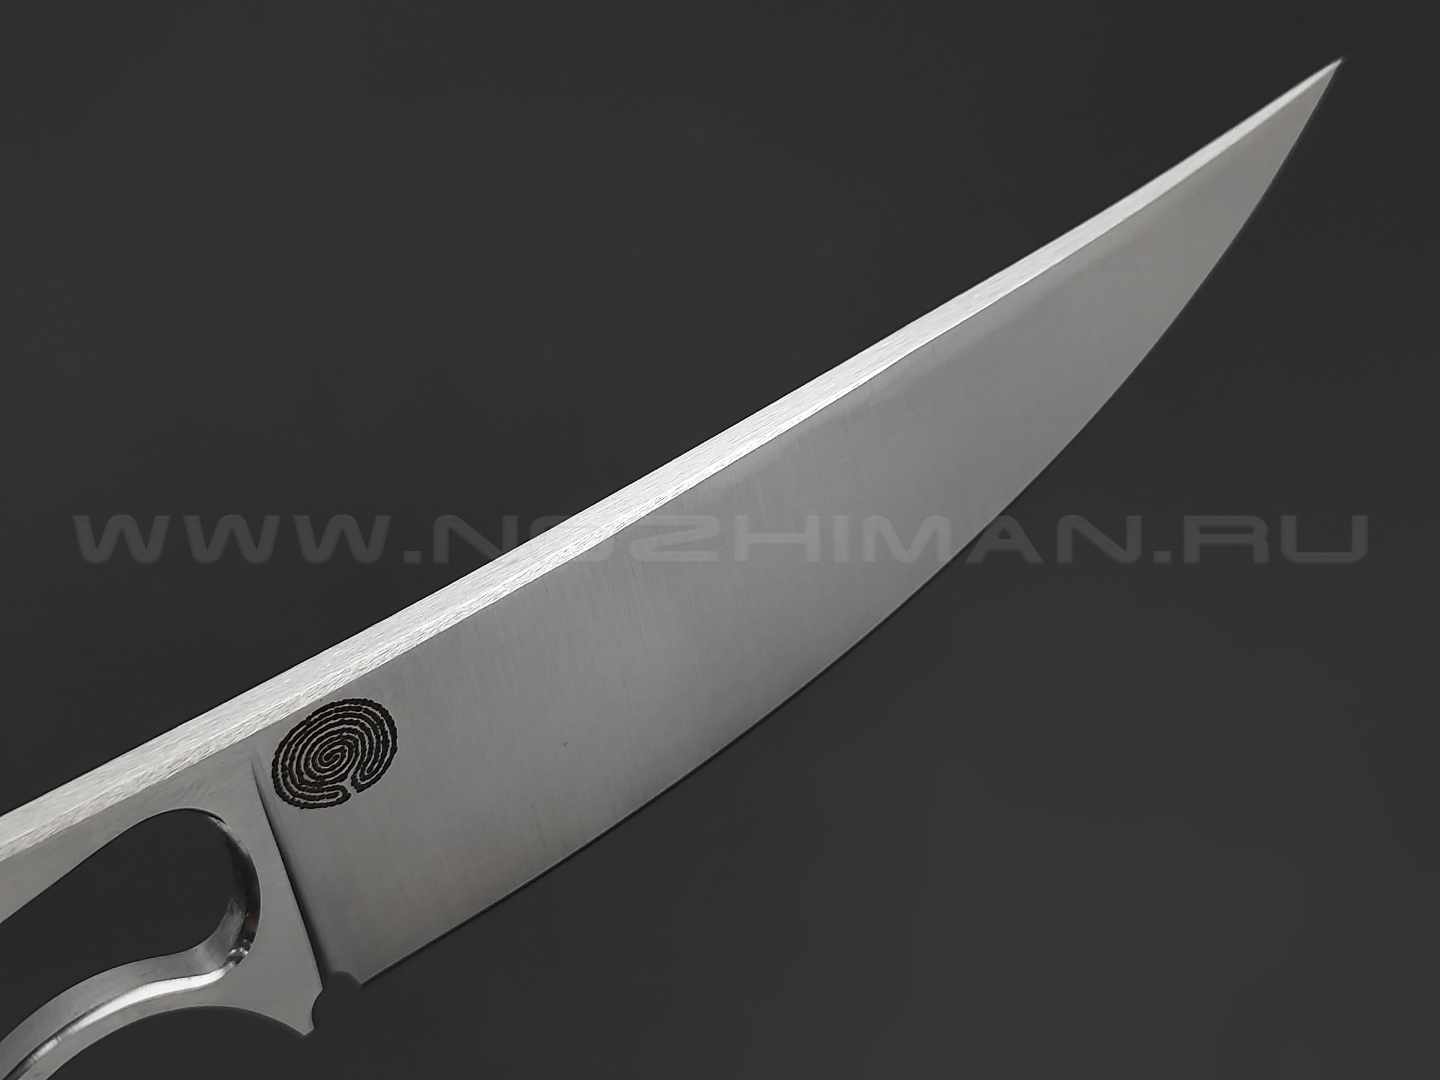 1-й Цех нож Острый Перец сталь 440C сатин, рукоять сталь, эмаль